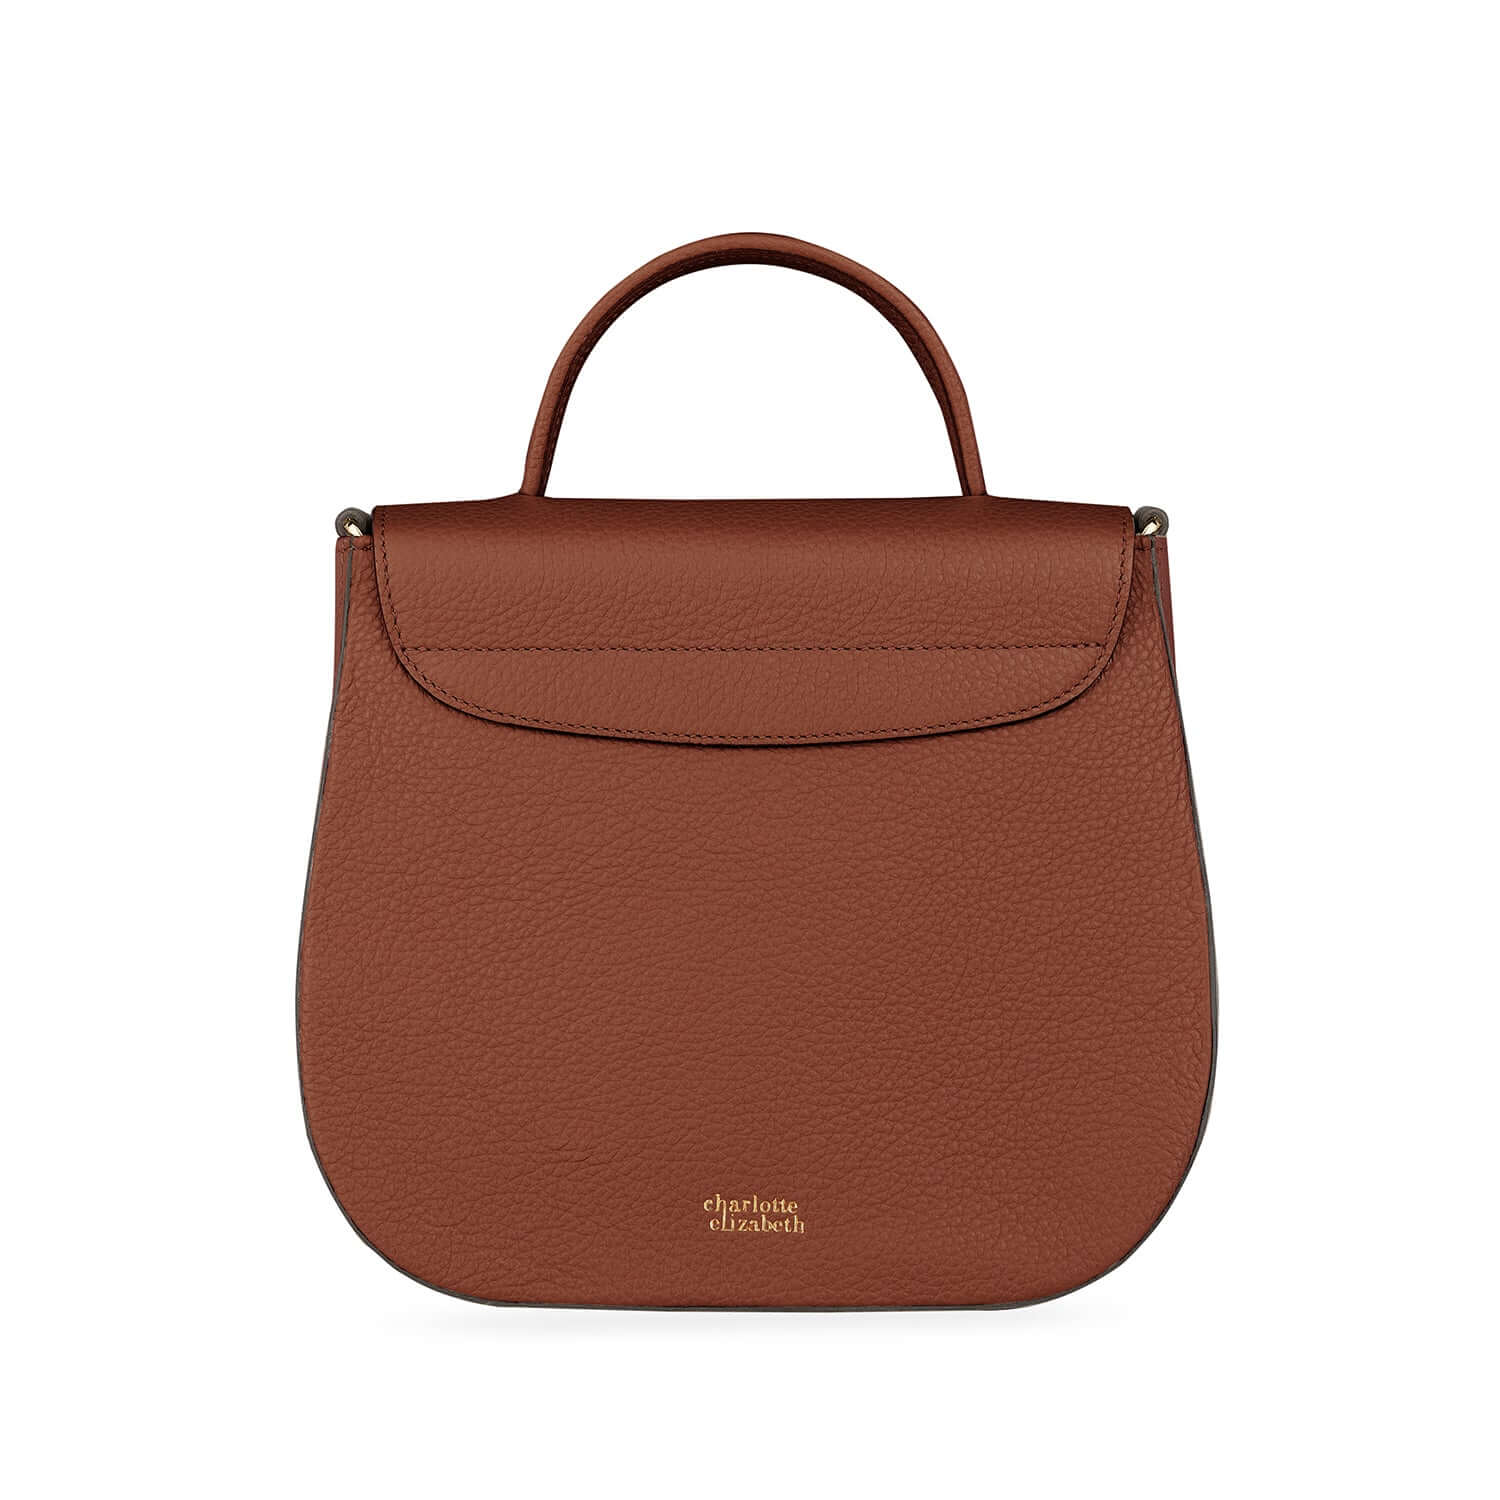 made in UK mini handbag purse elegant timeless classic brown